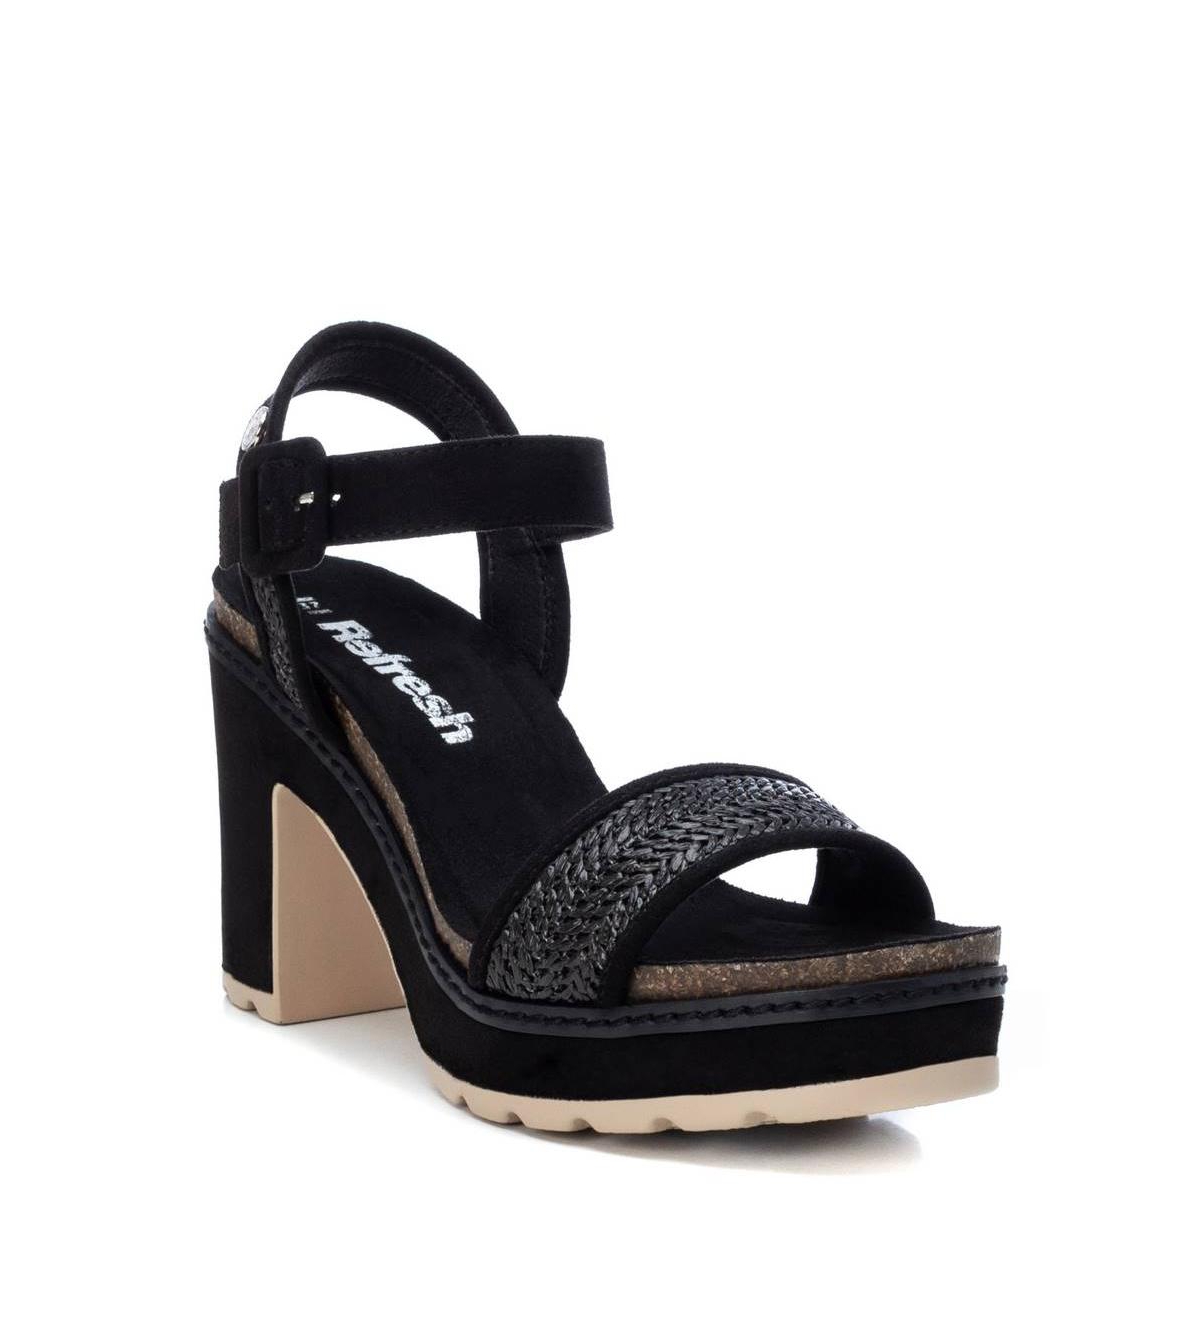 Women's Heeled Suede Sandals By Xti, Black - Black